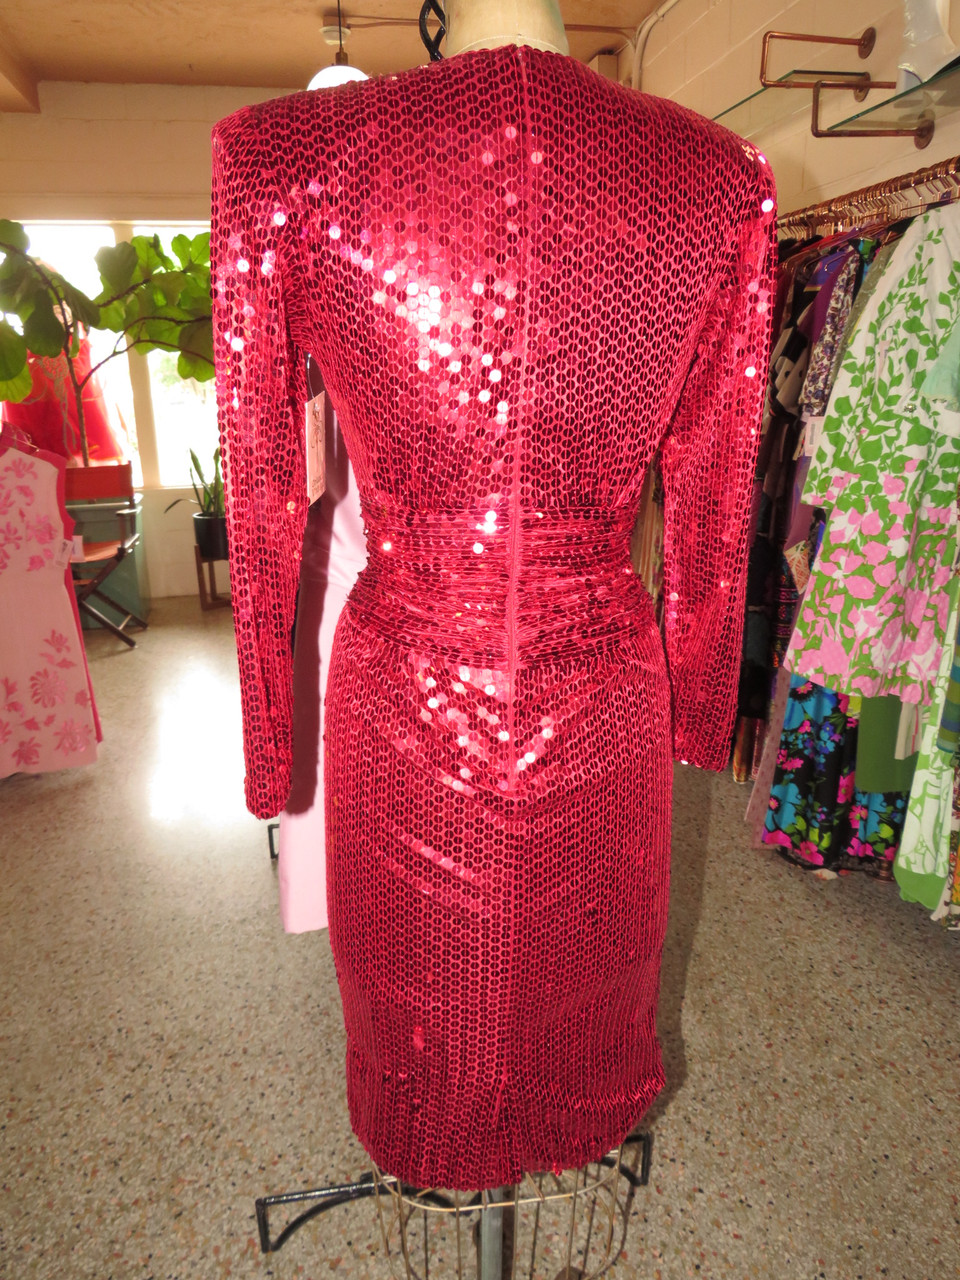 Oleg Cassini Hot Pink Sequin Dress - Orlando Vintage Clothing and